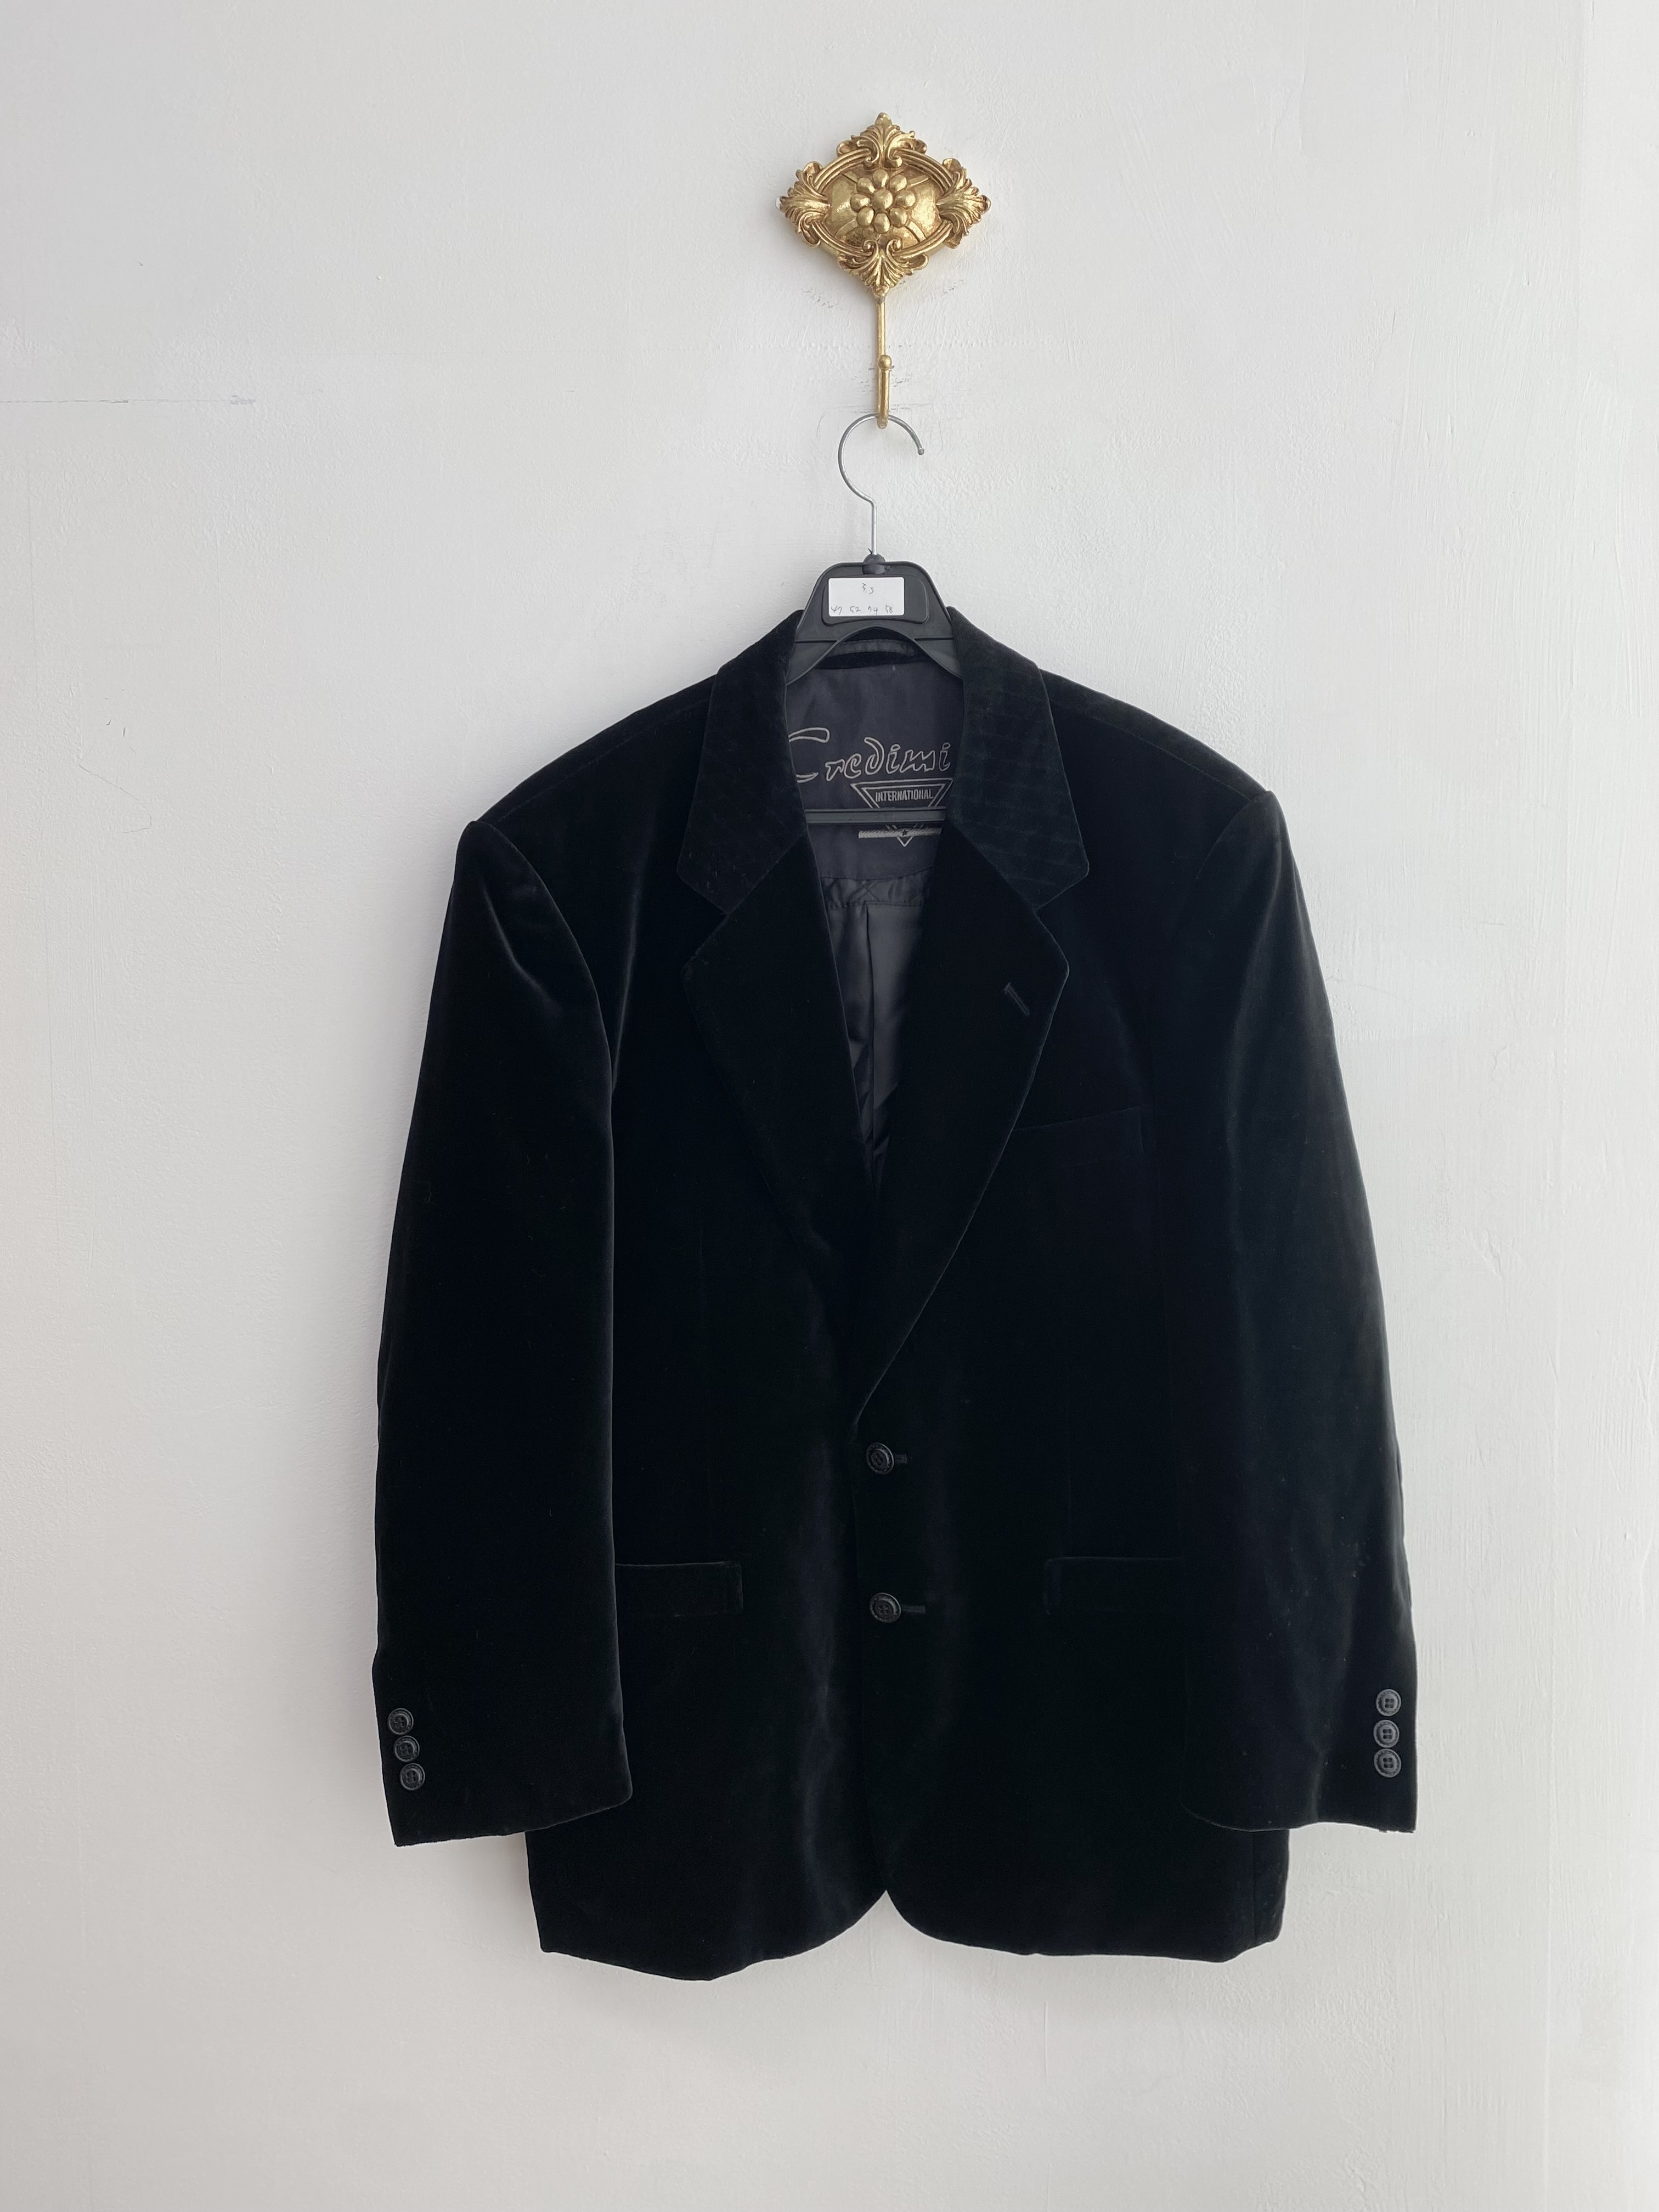 Black velvet boxy fit jacket